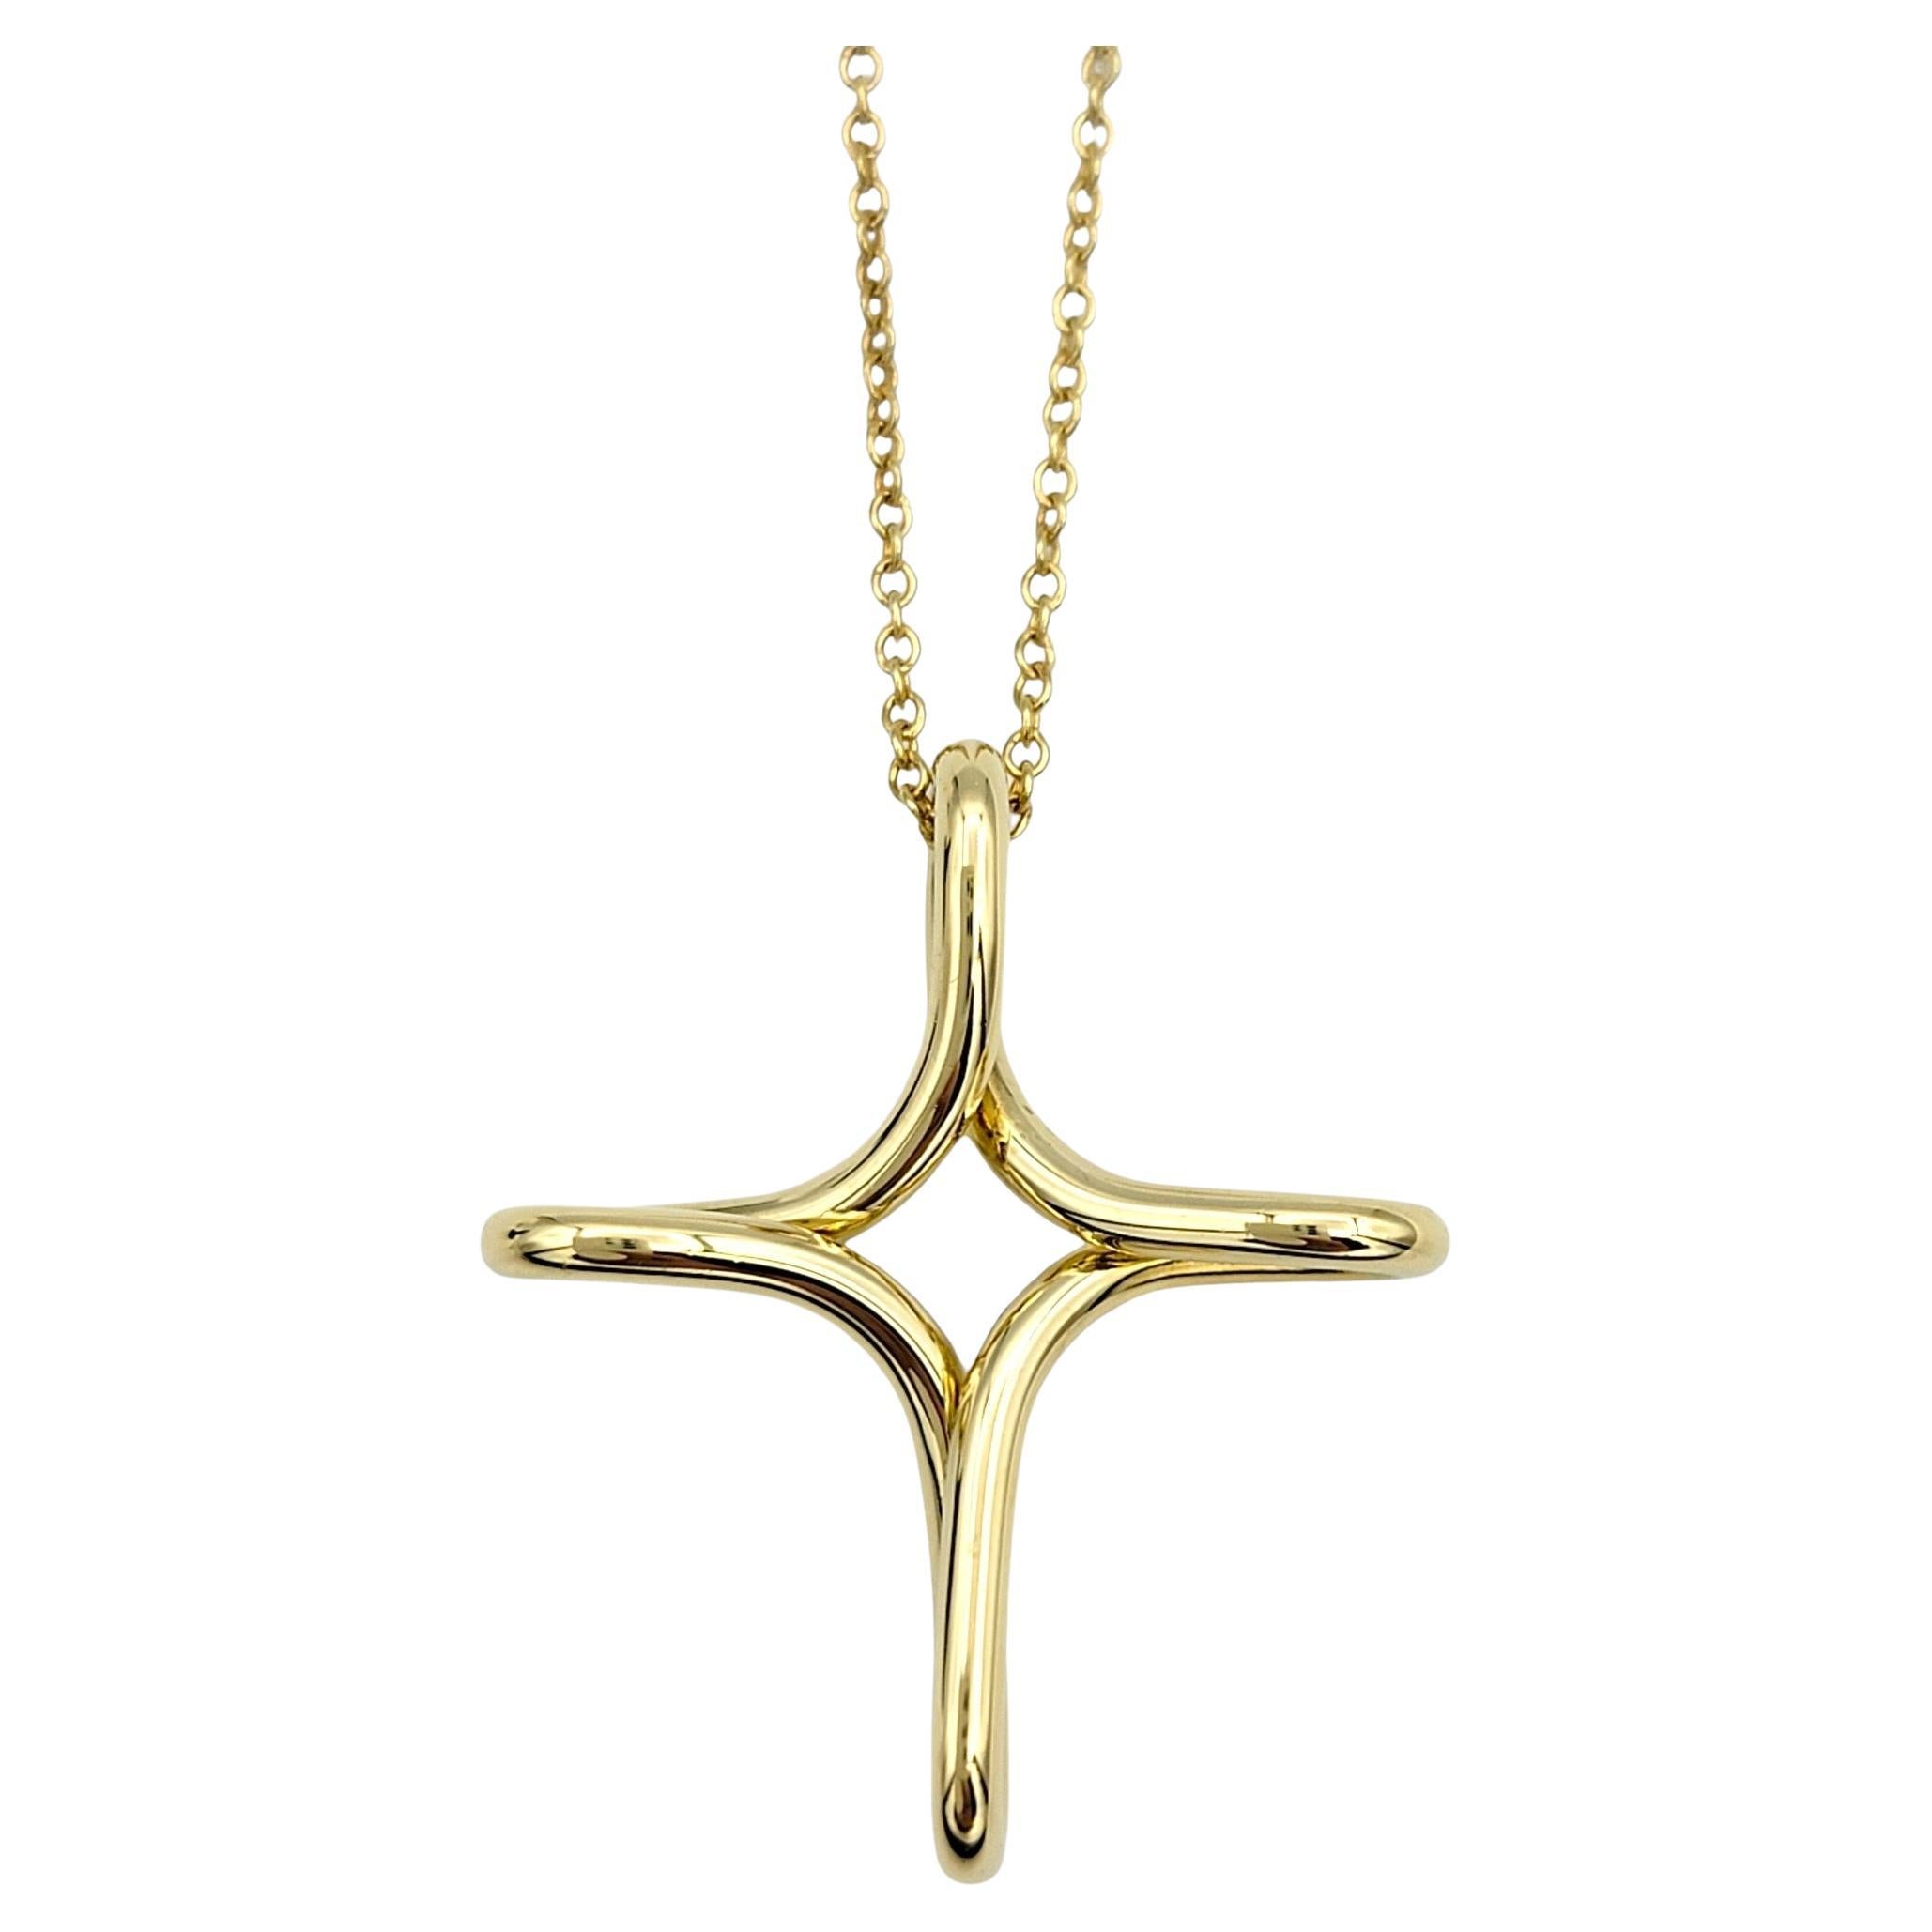 Tiffany & Co. Elsa Peretti Infinity Cross Pendant Necklace, 18 Karat Yellow Gold